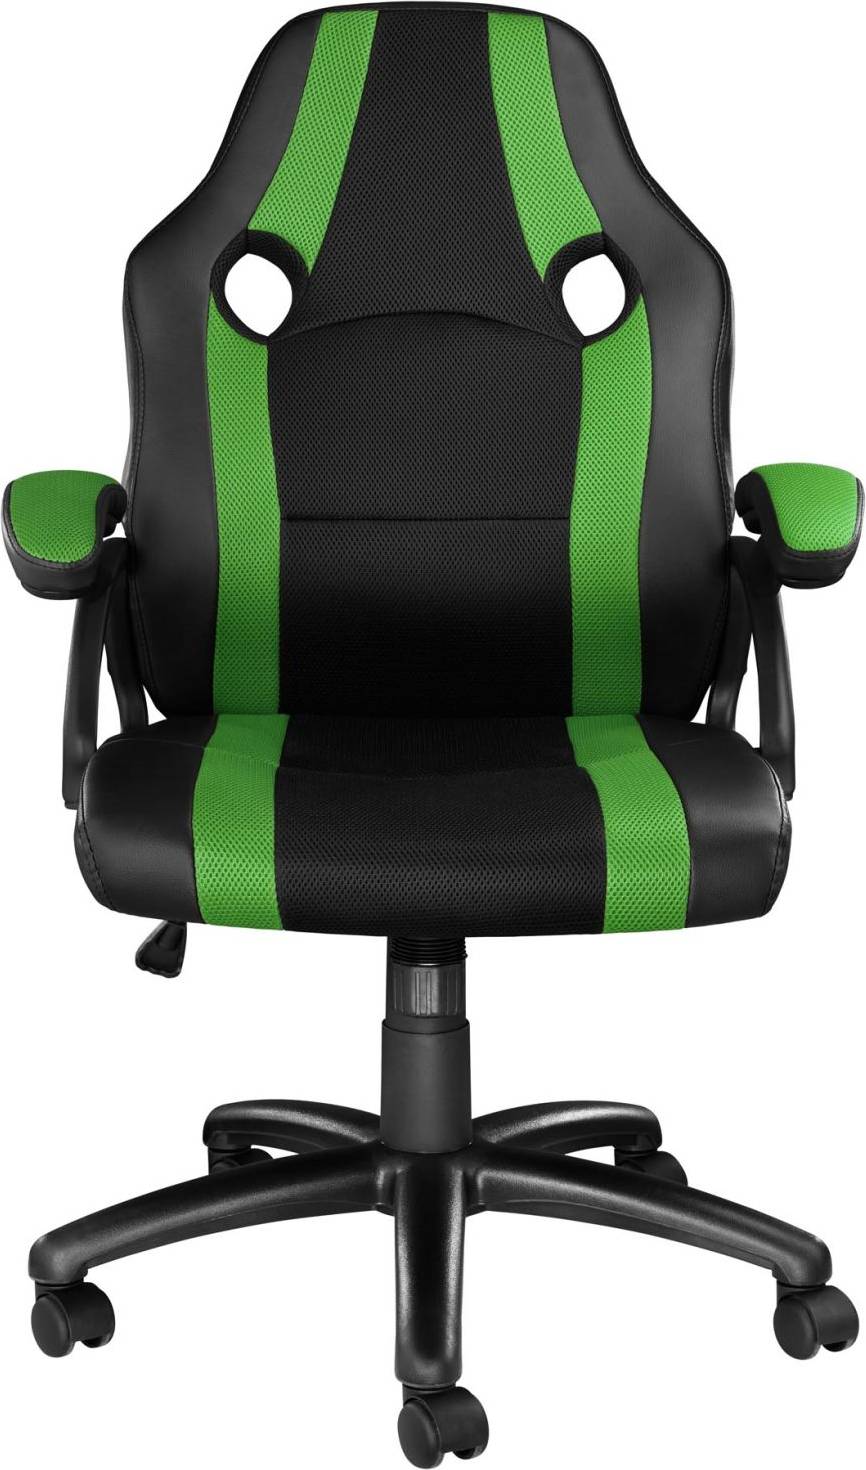  Bild på tectake Benny Gaming Chair - Black/Green gamingstol